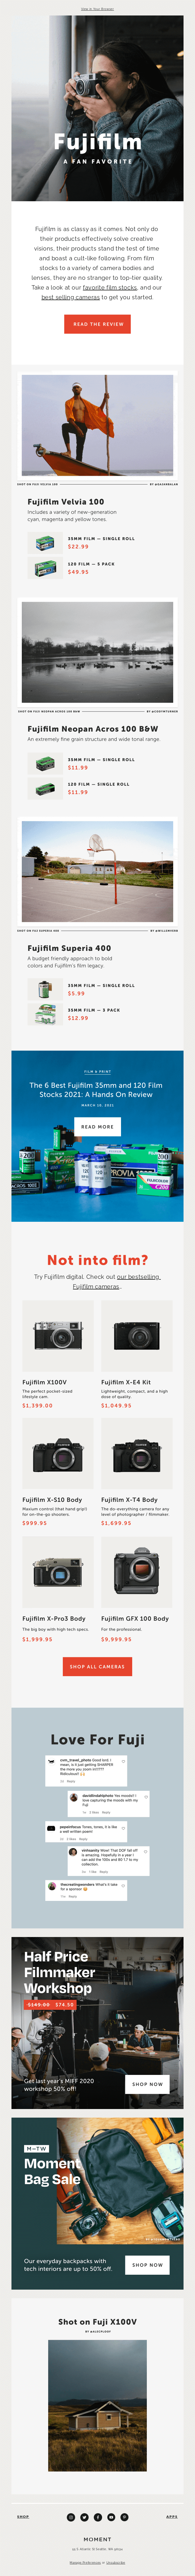 Fujifilm Strikes Back